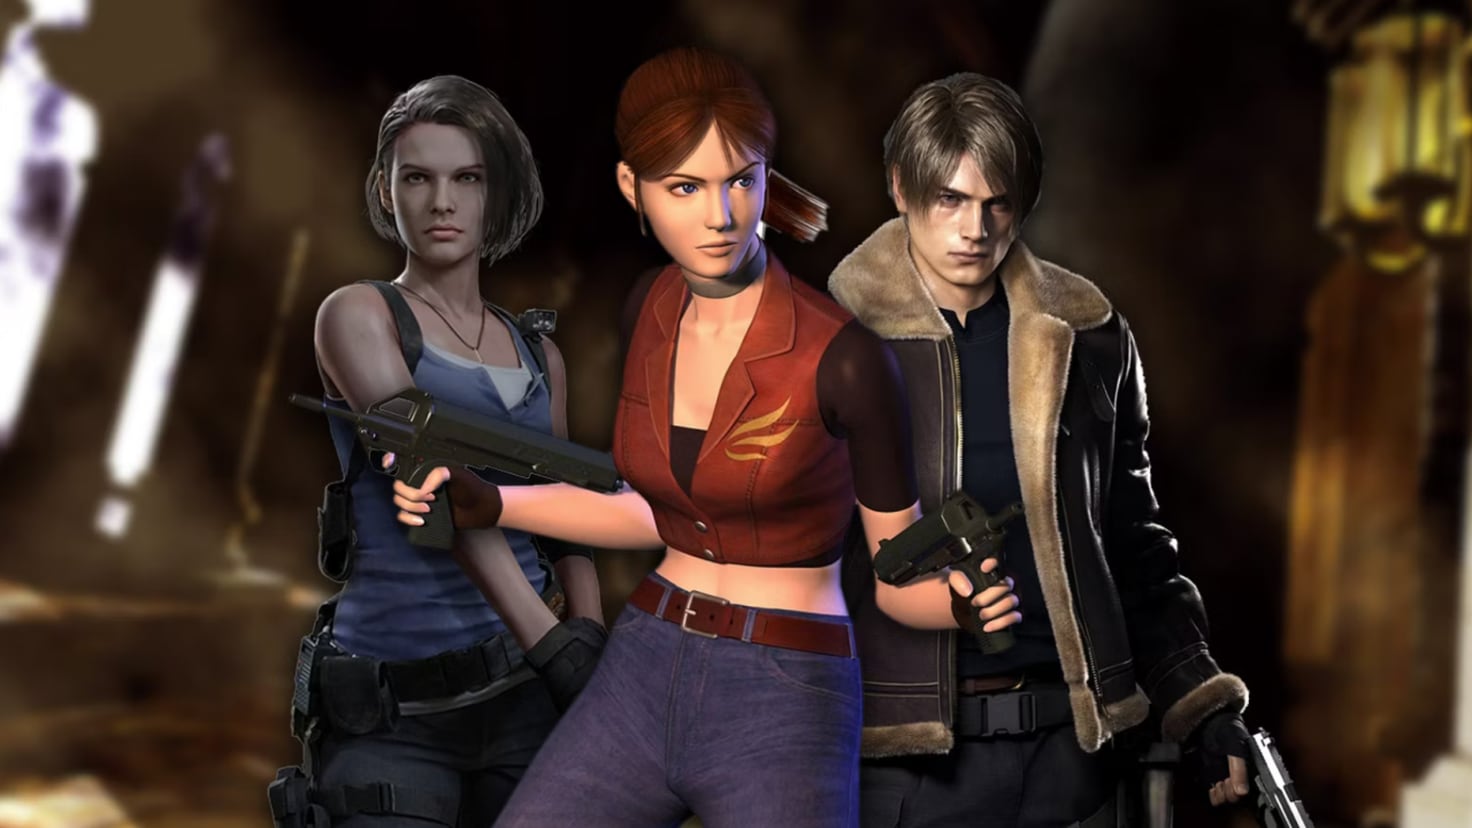 Resident Evil Code Veronica Remake is not in Capcom's plans - Meristation